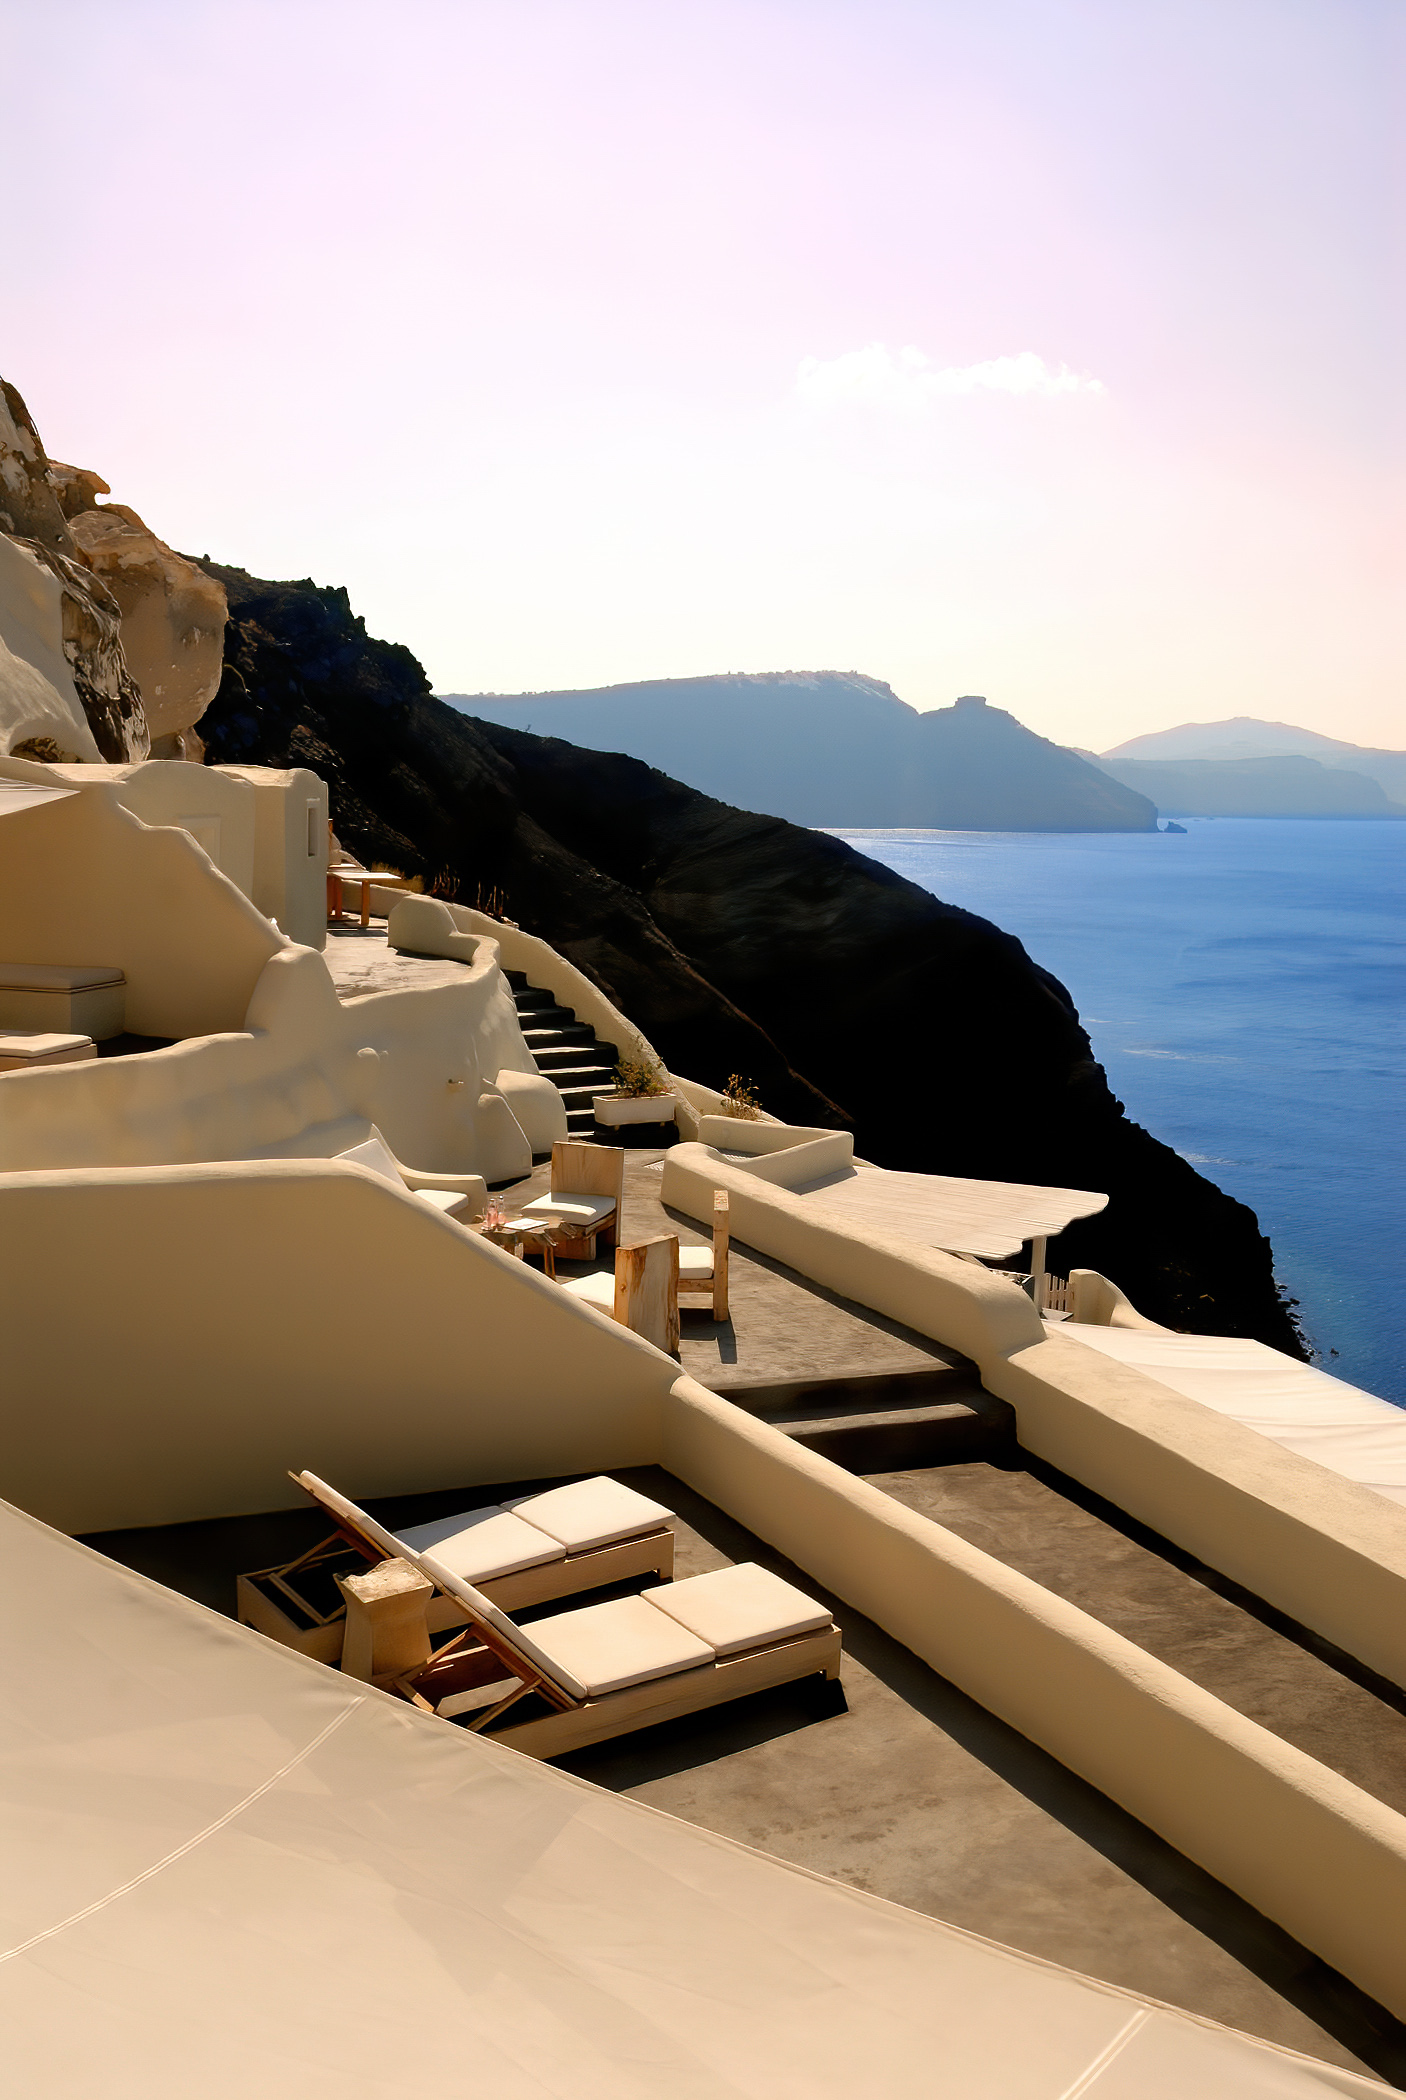 Mystique Hotel Santorini – Oia, Santorini Island, Greece – Clifftop Ocean View Deck